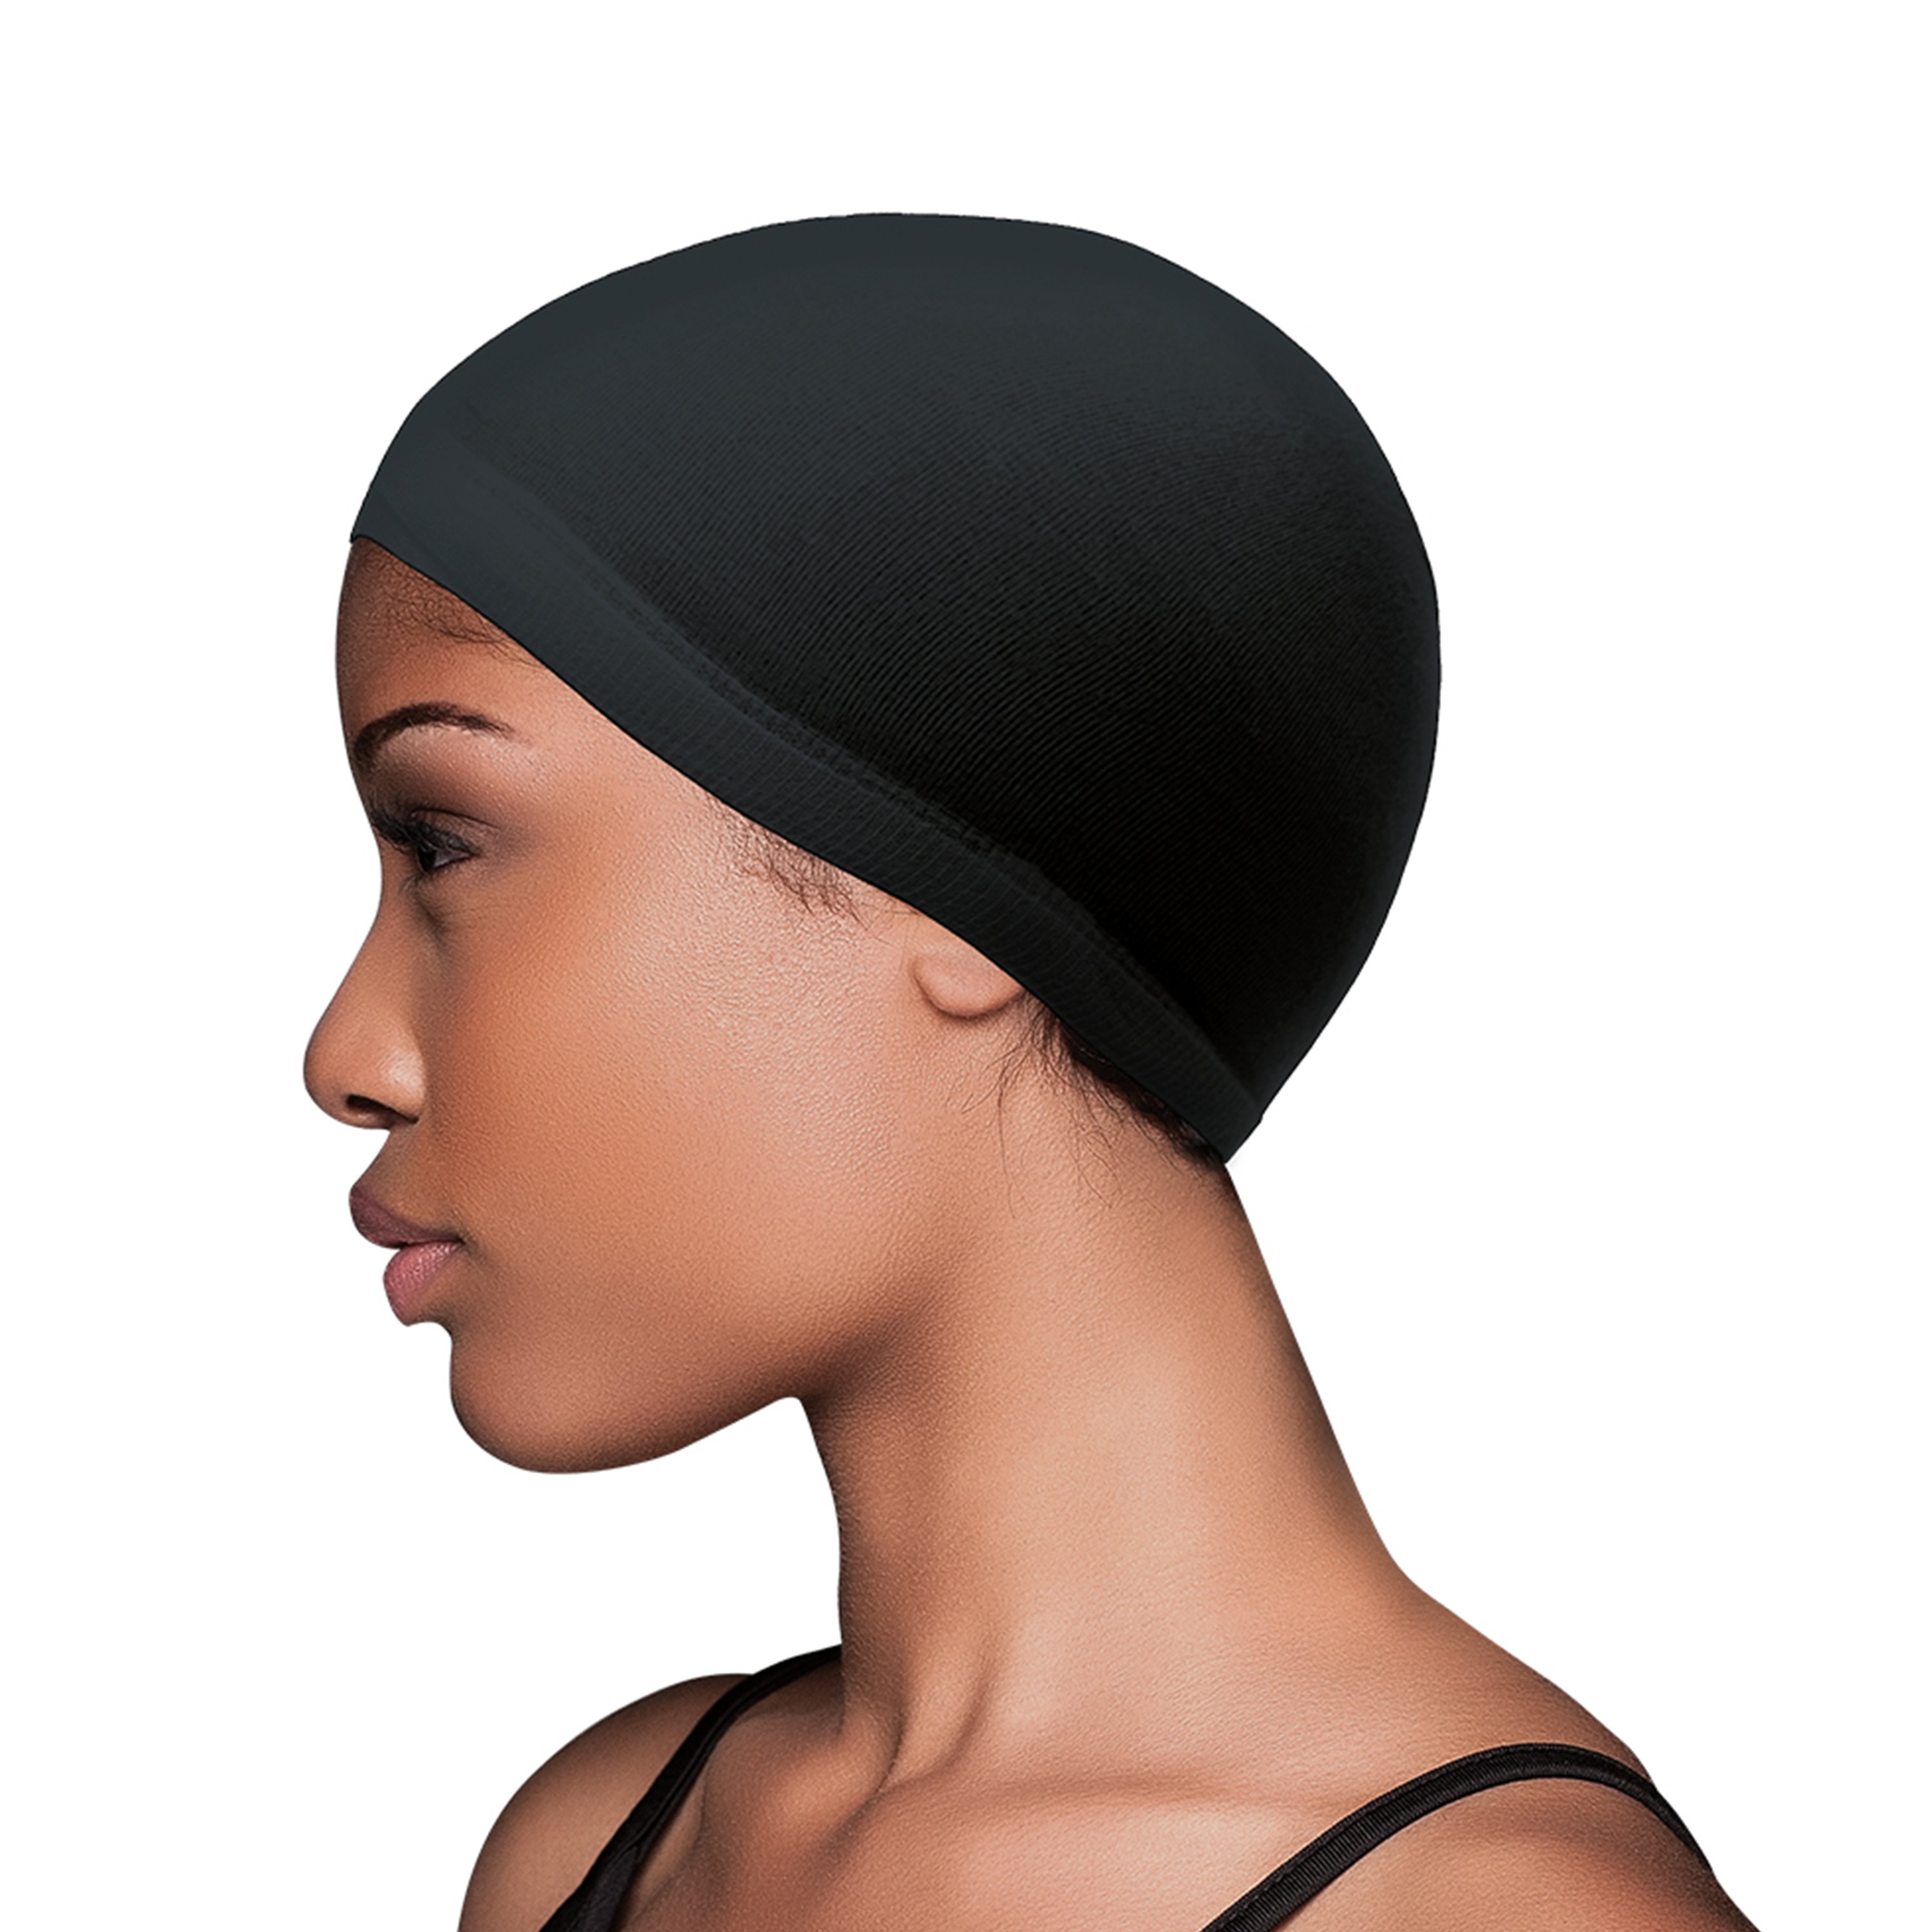 WavEnforcer Stretch Cap - Black - Shop Hair Accessories at H-E-B